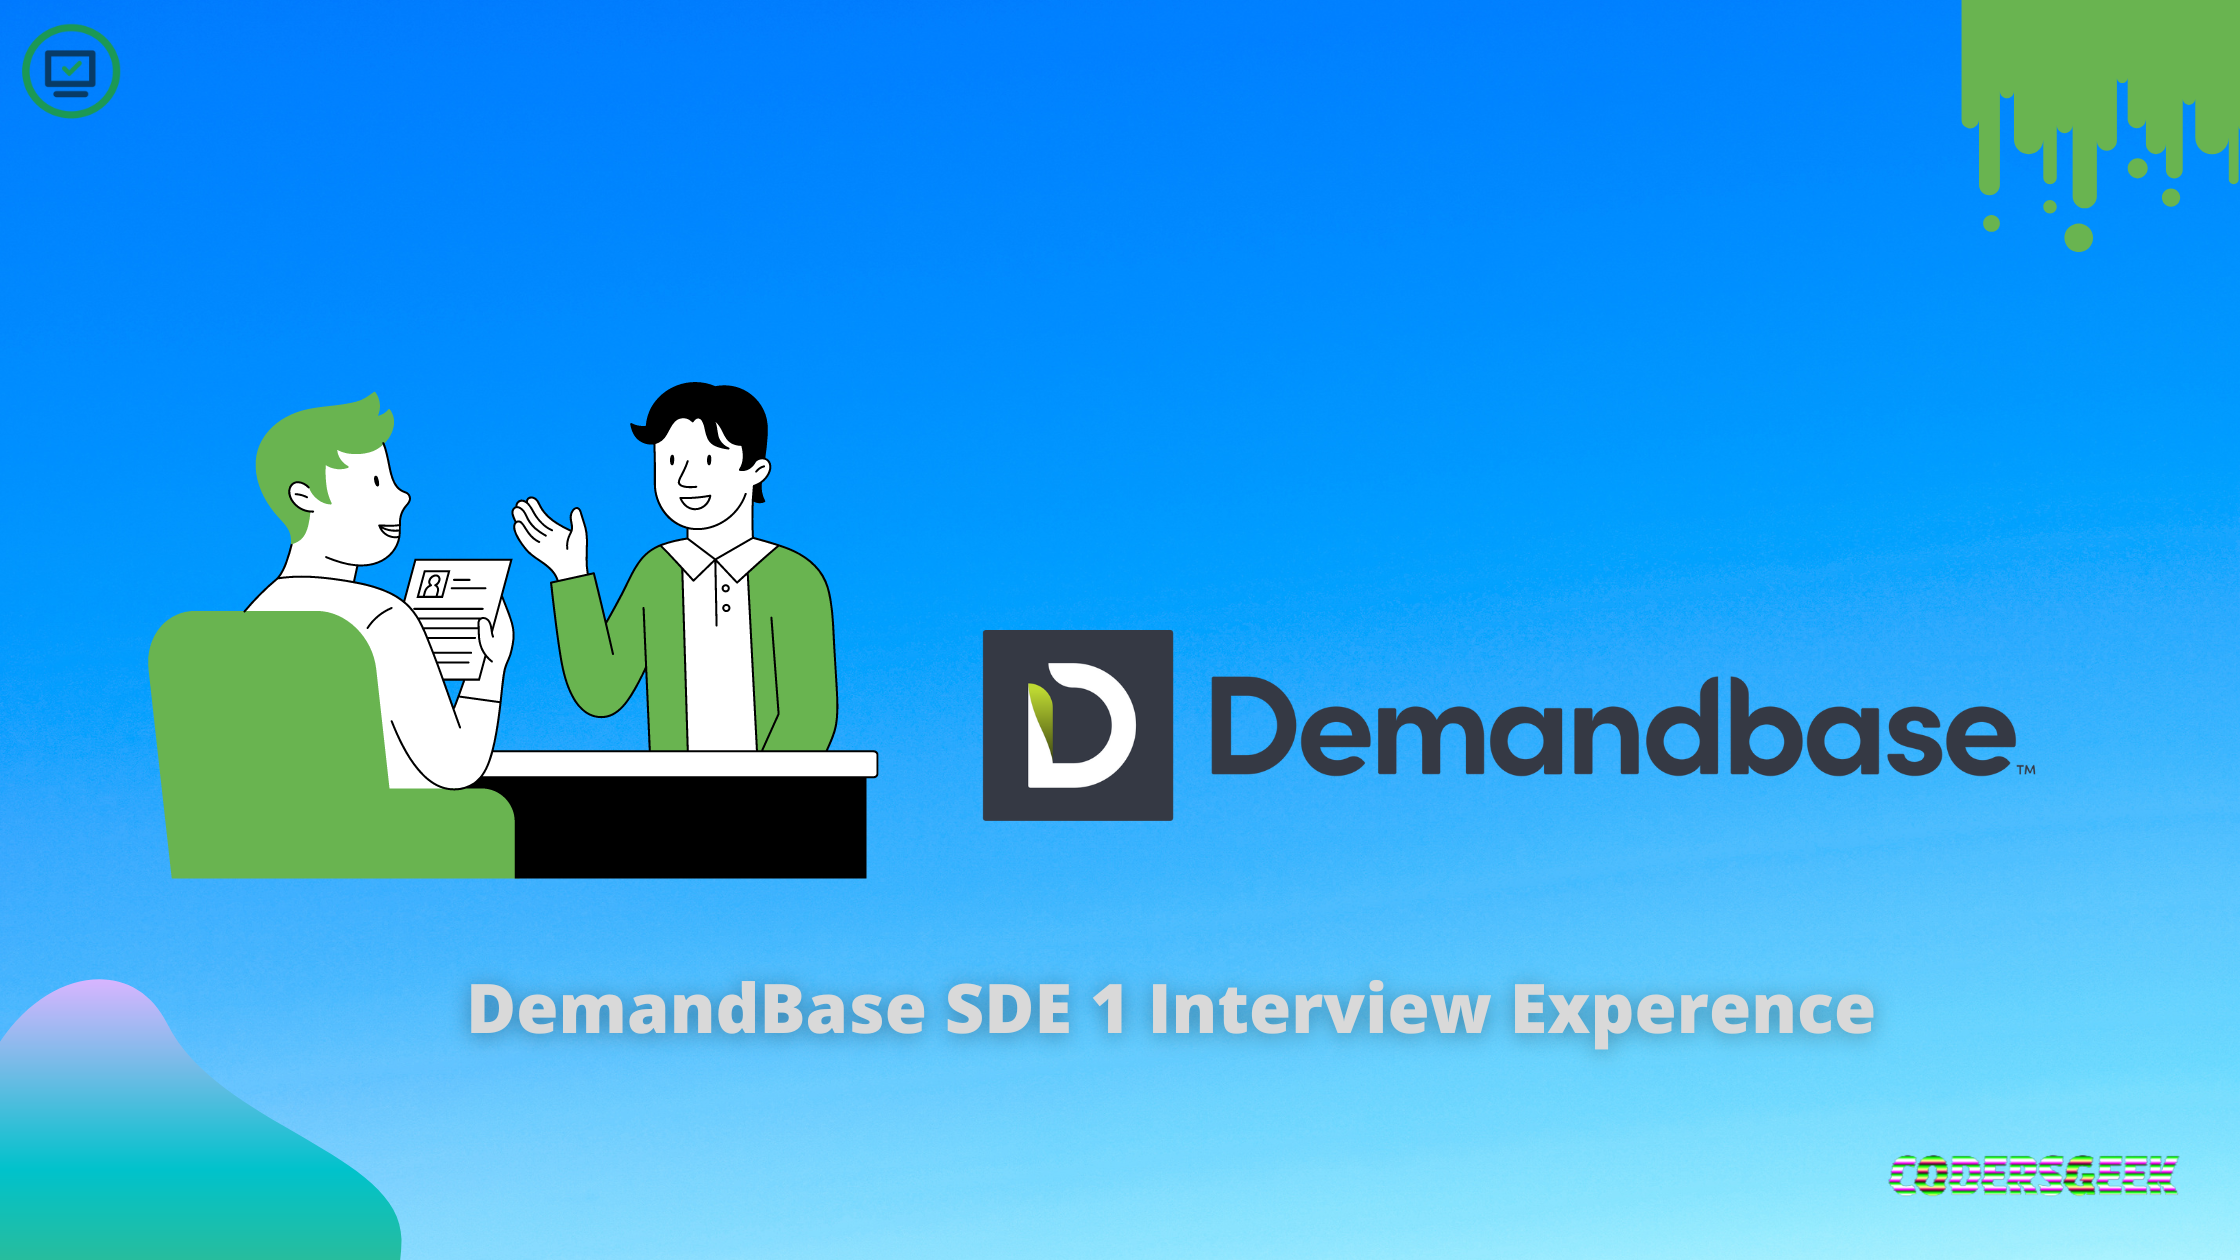 DemandBase SDE 1 Interview Experience